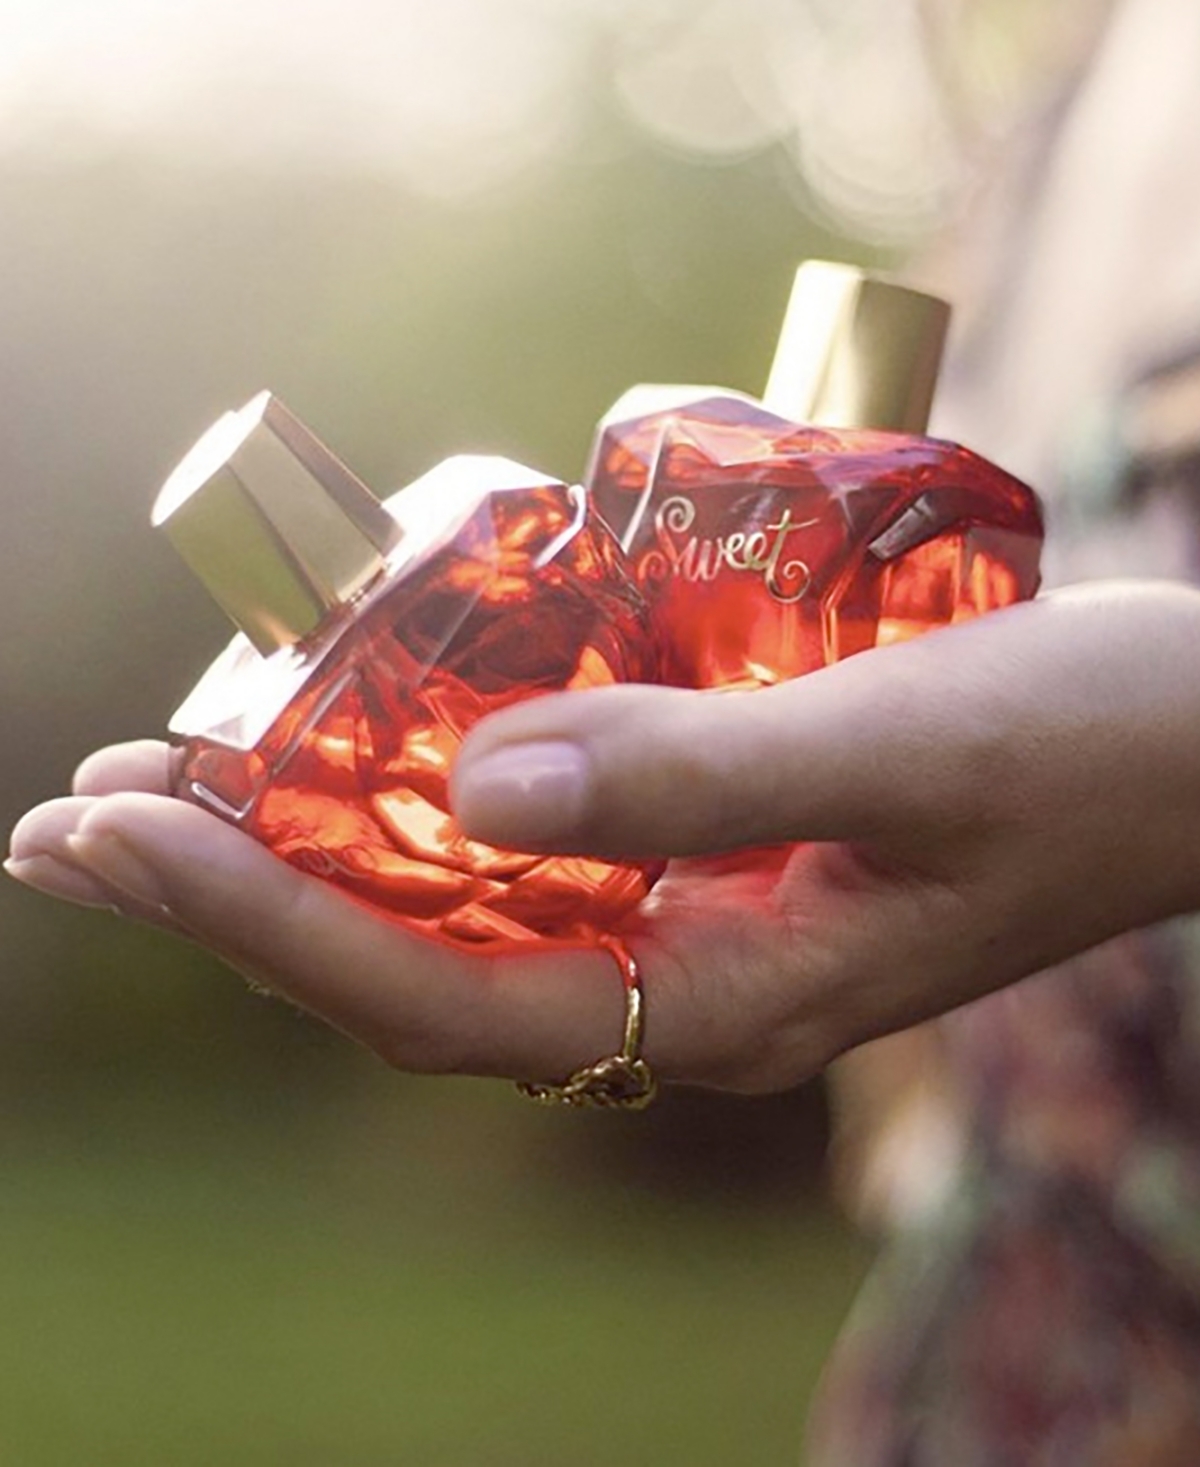 Lolita Lempicka Sweet de Women\'s Smart Oz Closet 1.7 Eau Perfume | Spray